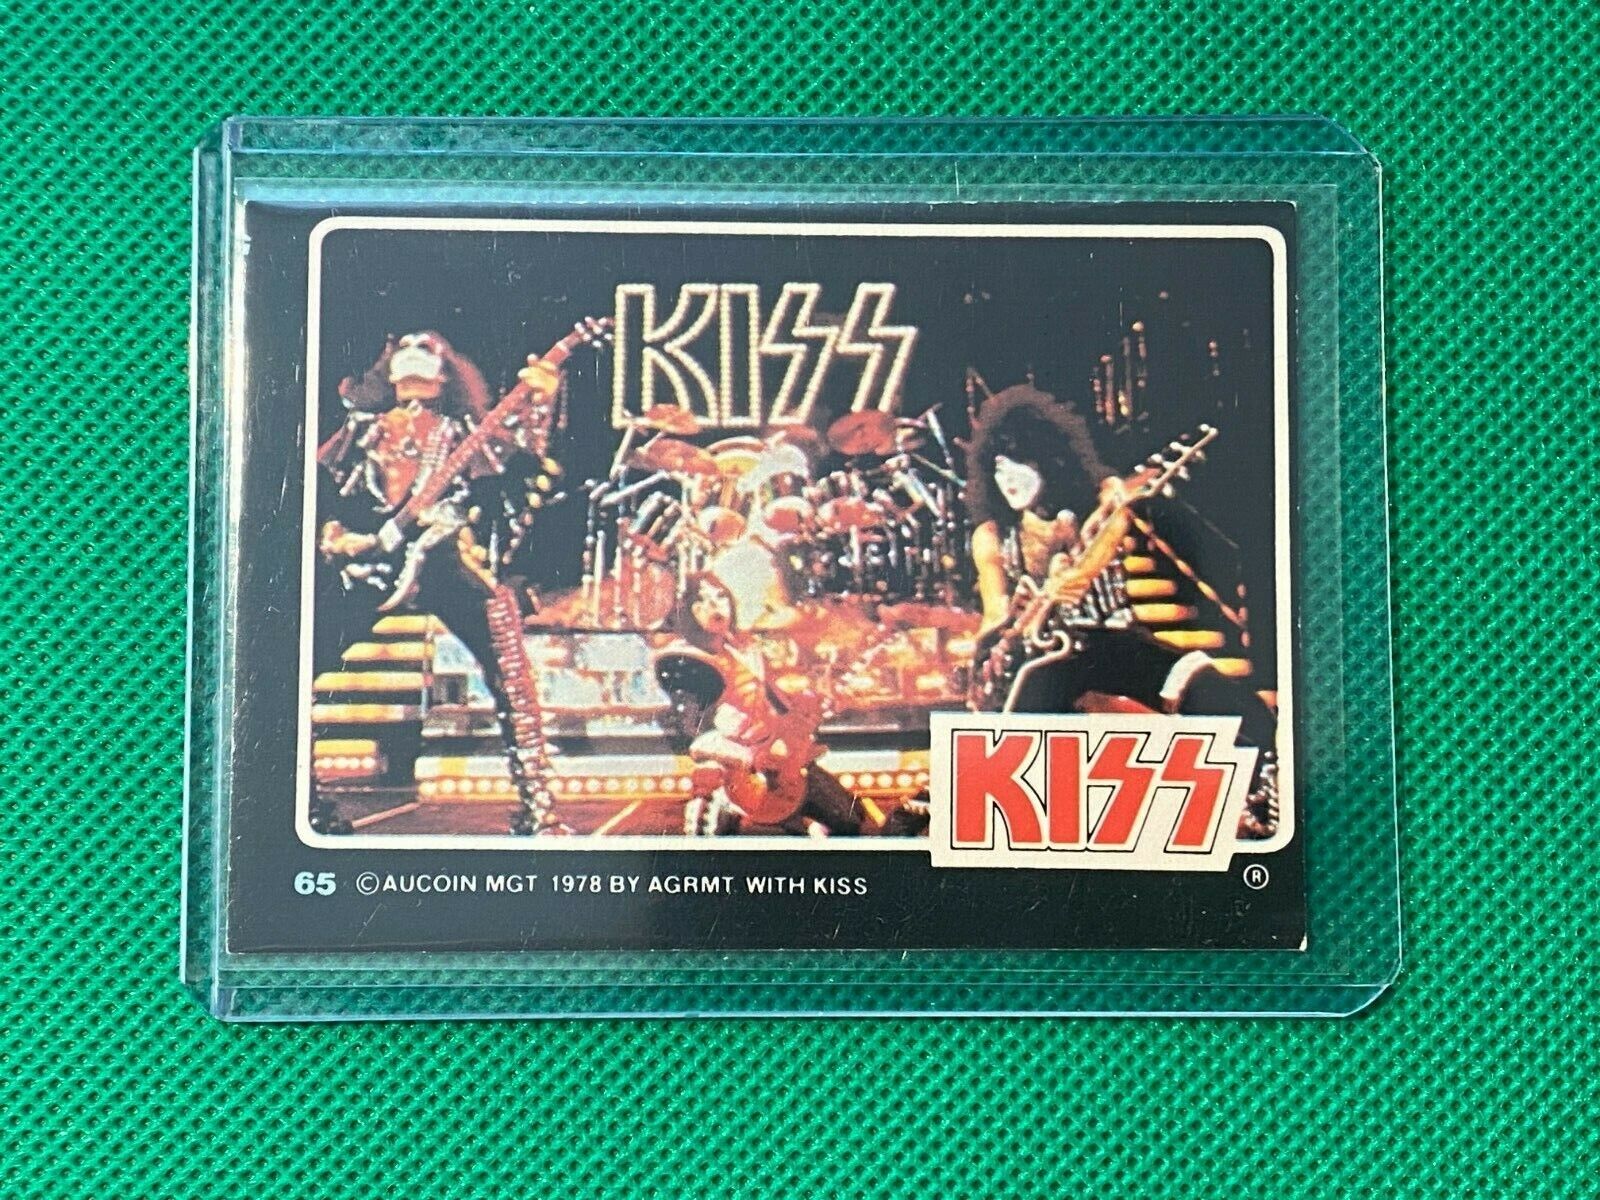 KISS - DONRUSS - 1979 ROCK STARS PHOTO CARD - VGC